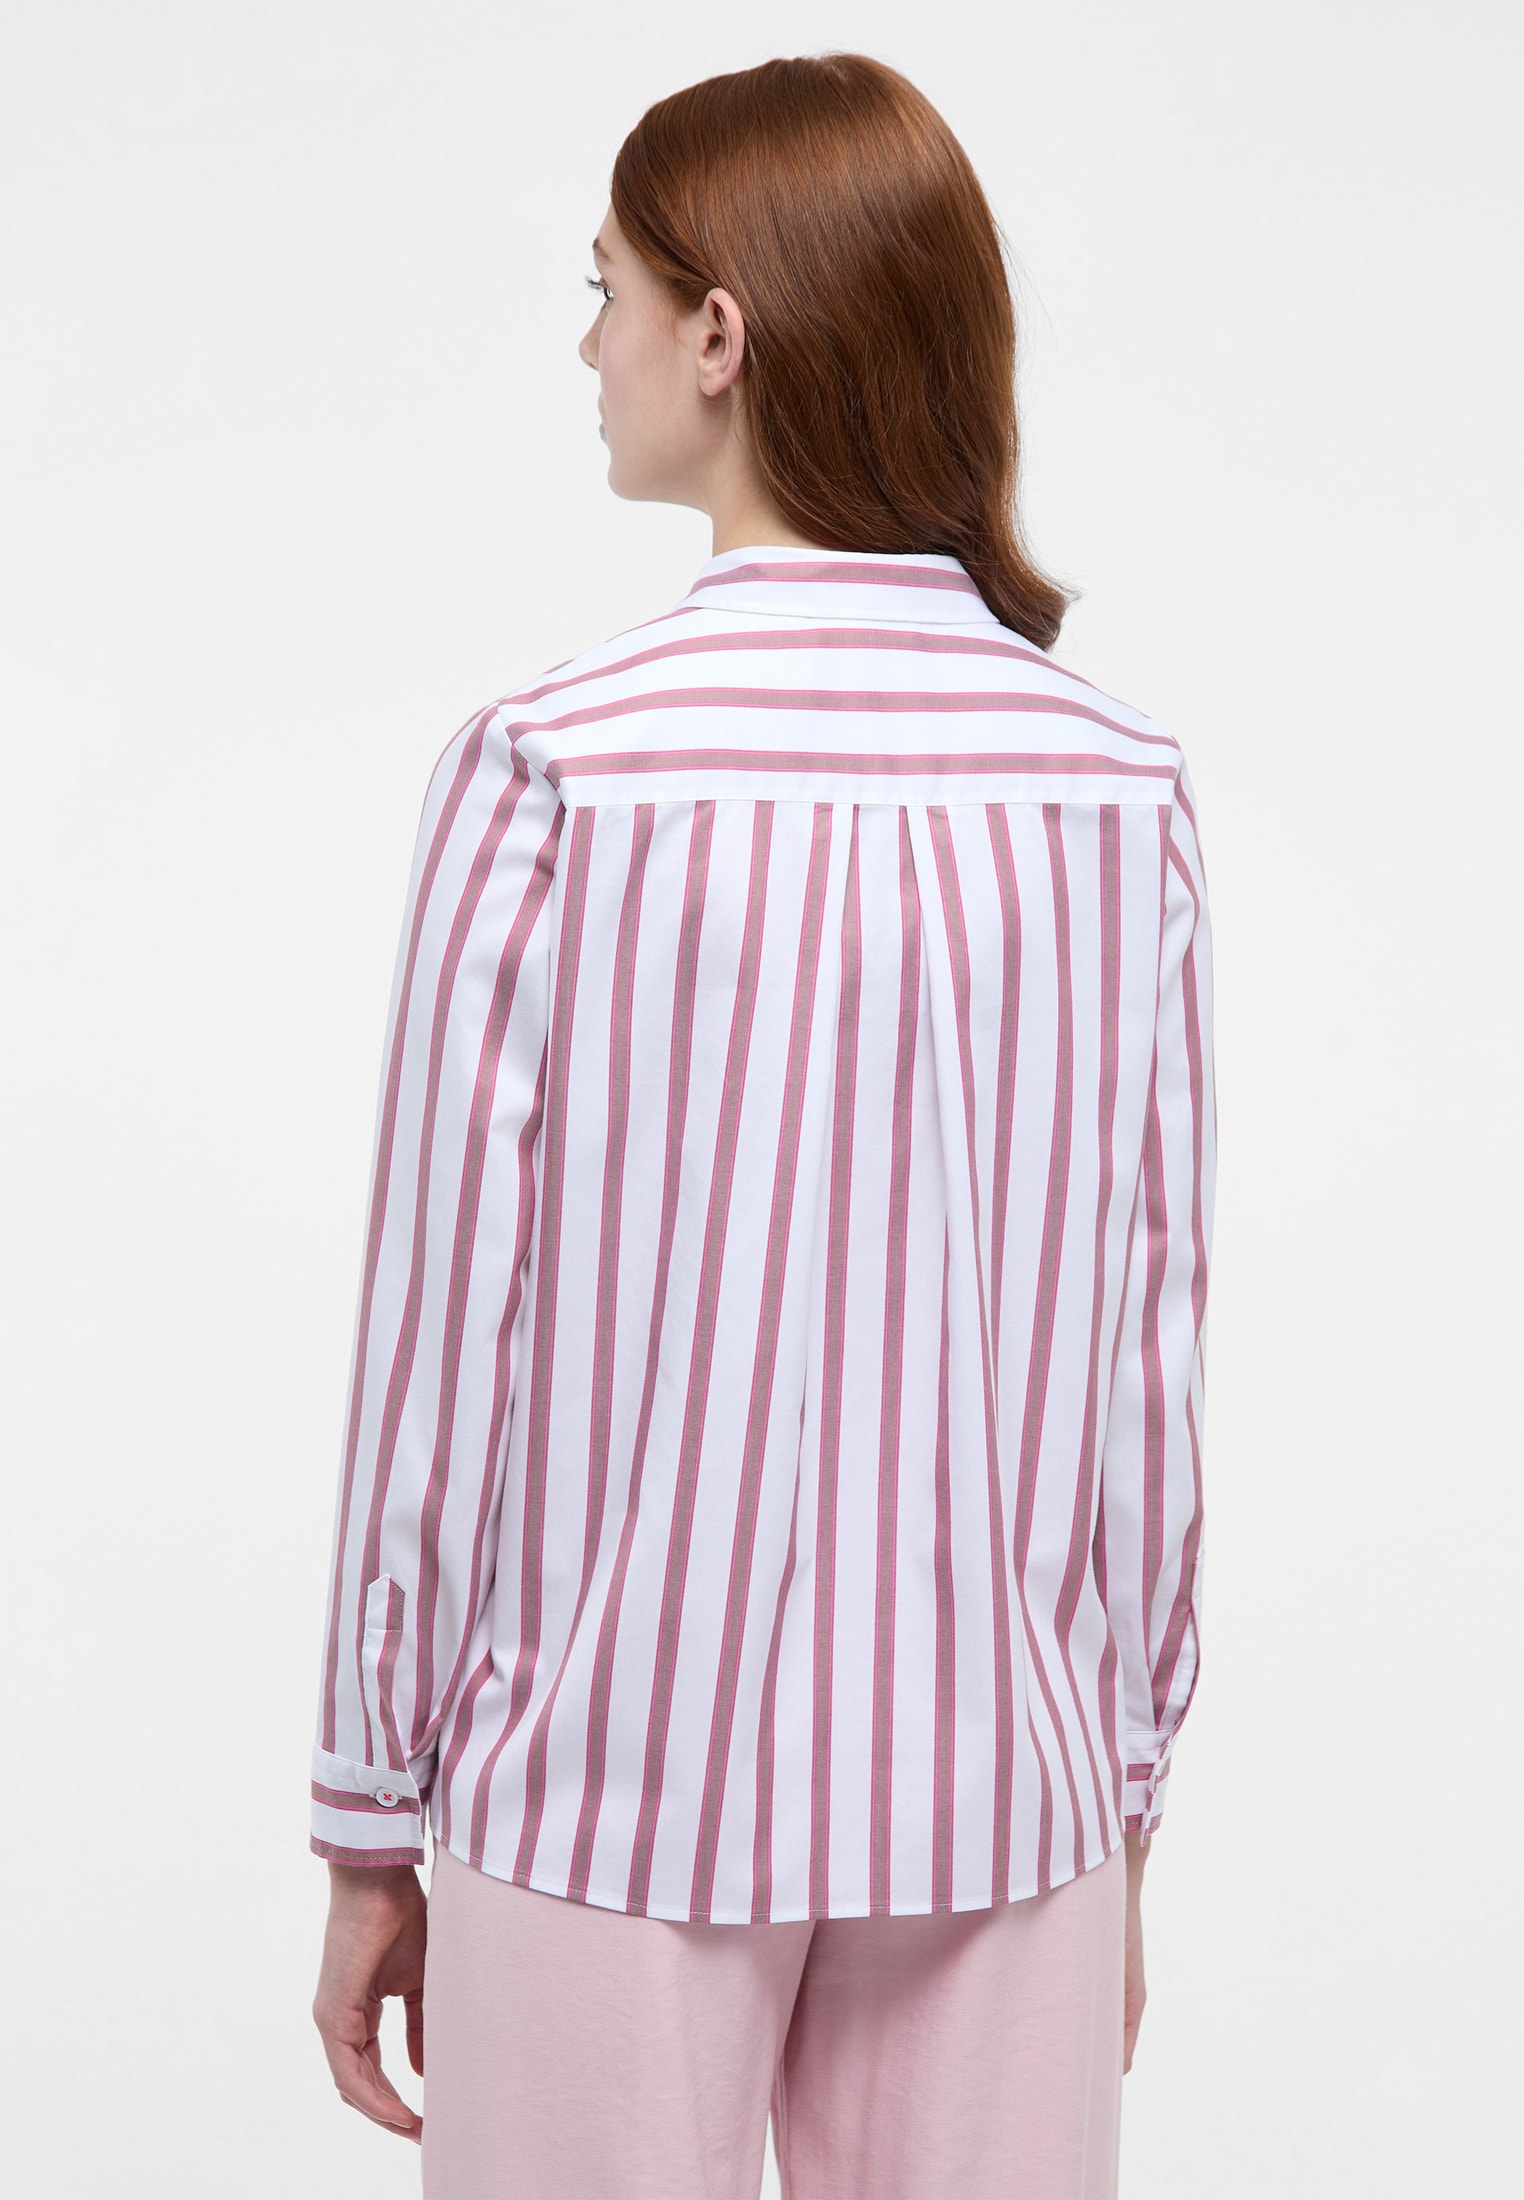 Soft Luxury Shirt | | | in Langarm 2BL04213-15-21-46-1/1 46 Bluse pink pink | gestreift